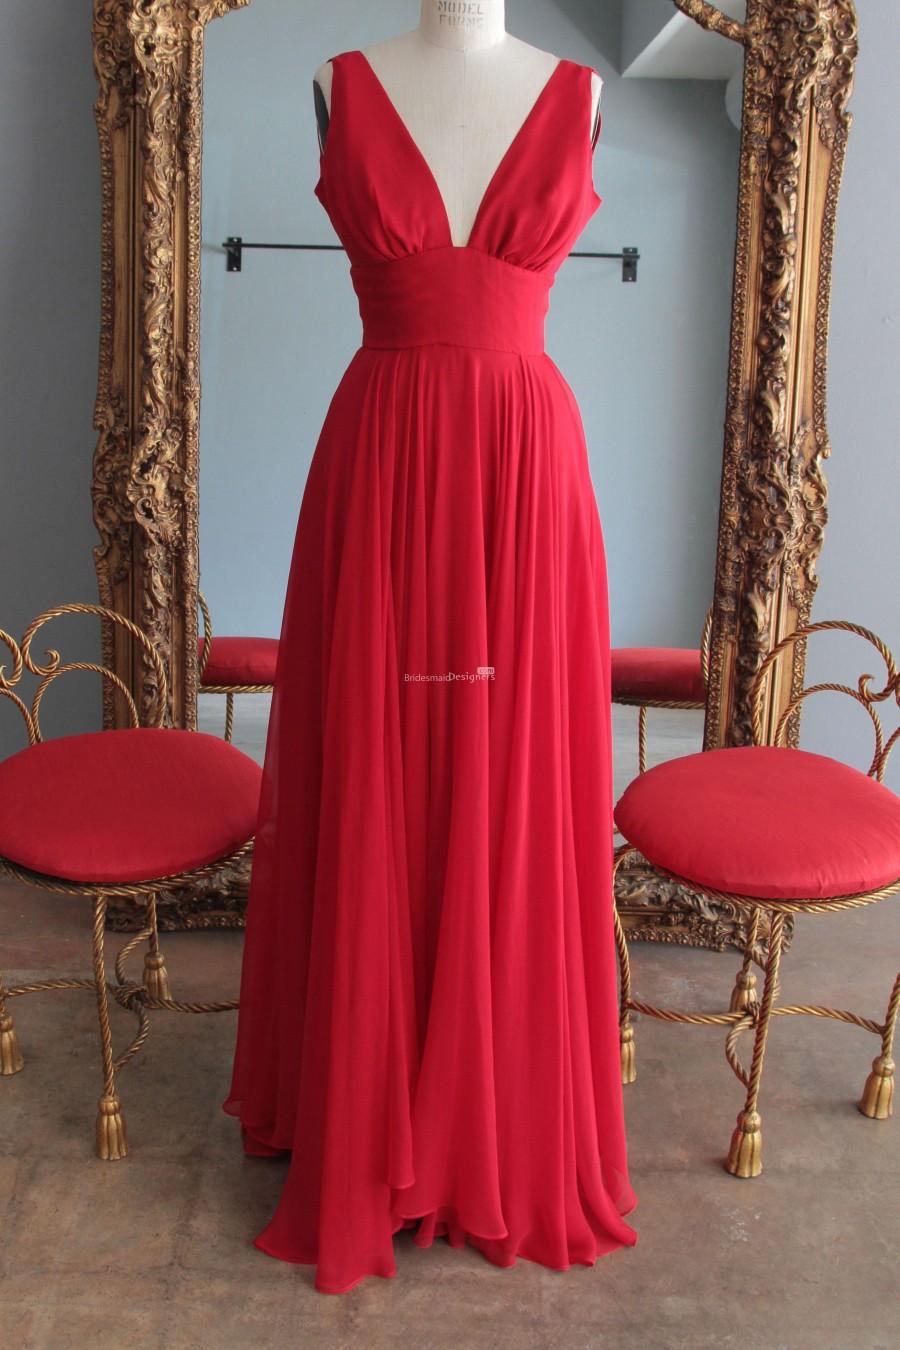 Hochzeit - Red Dress for Bridesmaid - BridesmaidDesigners